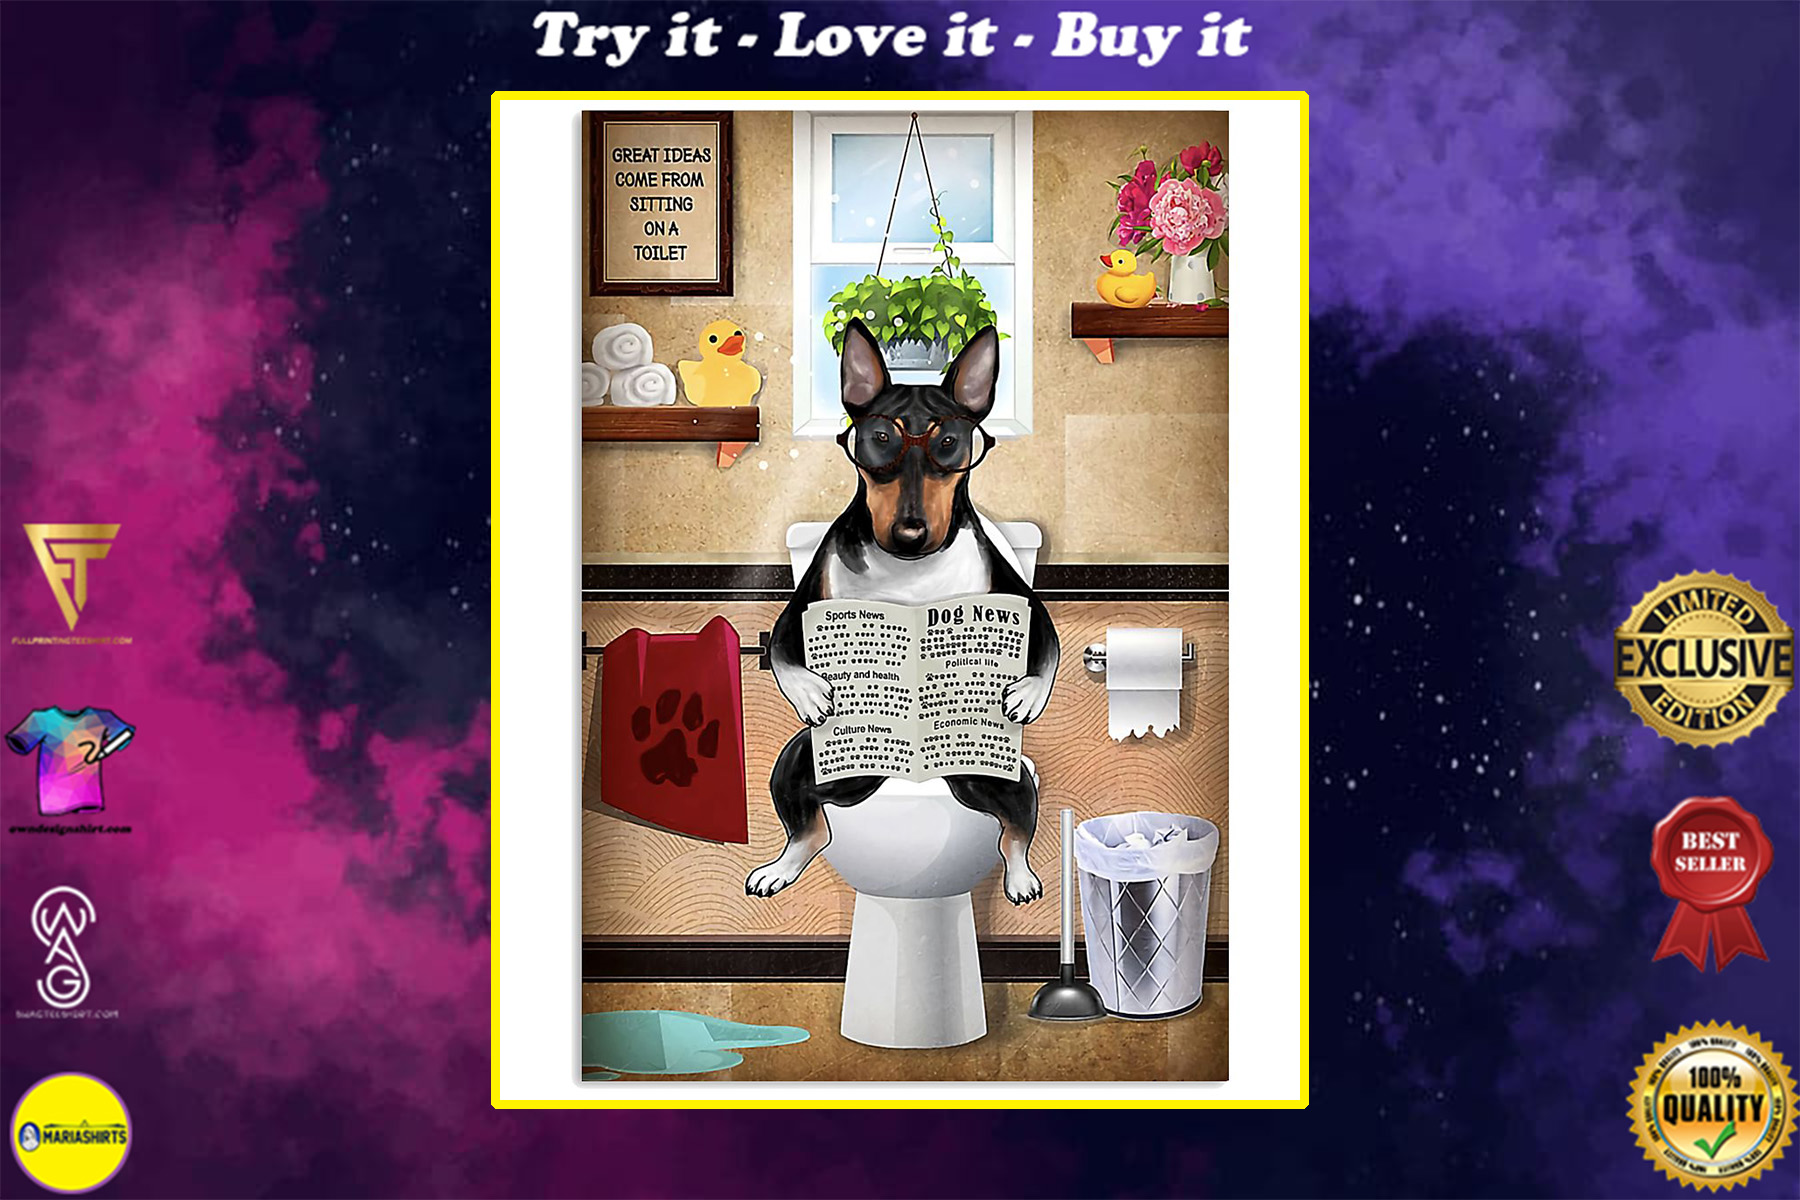 bull terrier sitting on toilet great ideas poster